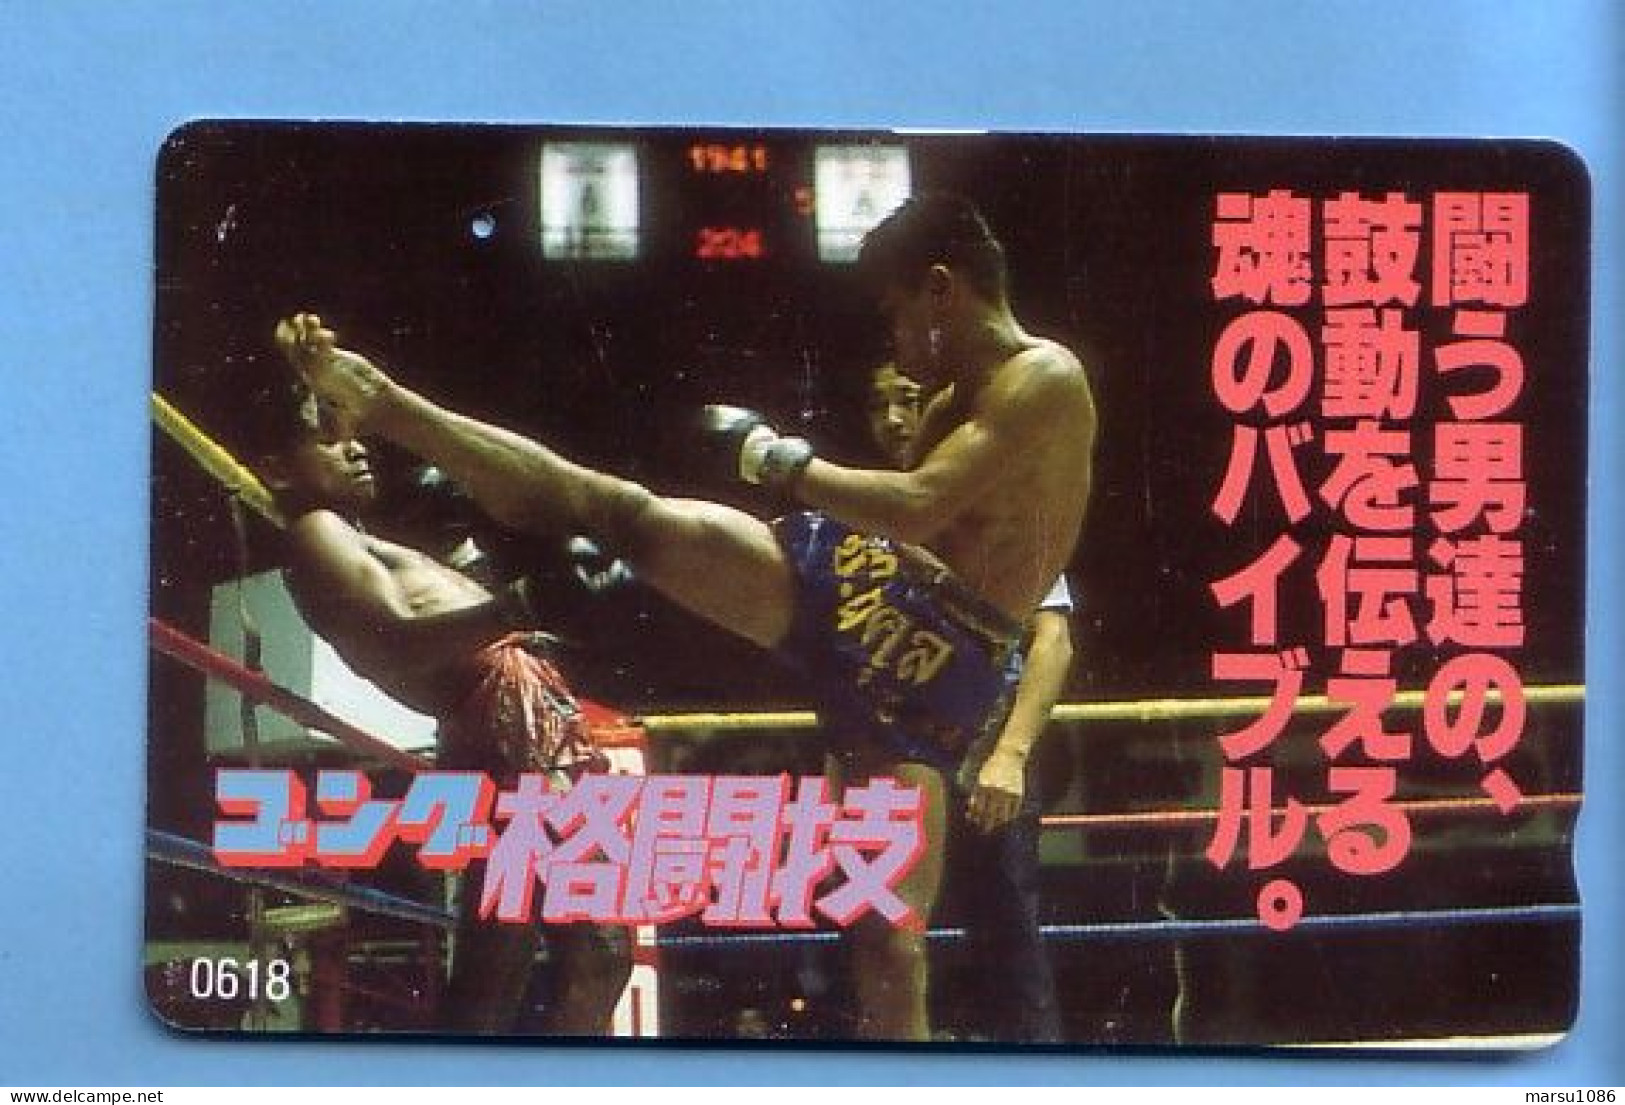 Japan Japon Telefonkarte Télécarte Phonecard Telefoonkaart -  Sport Wrestling Ringen Boxen - Sport